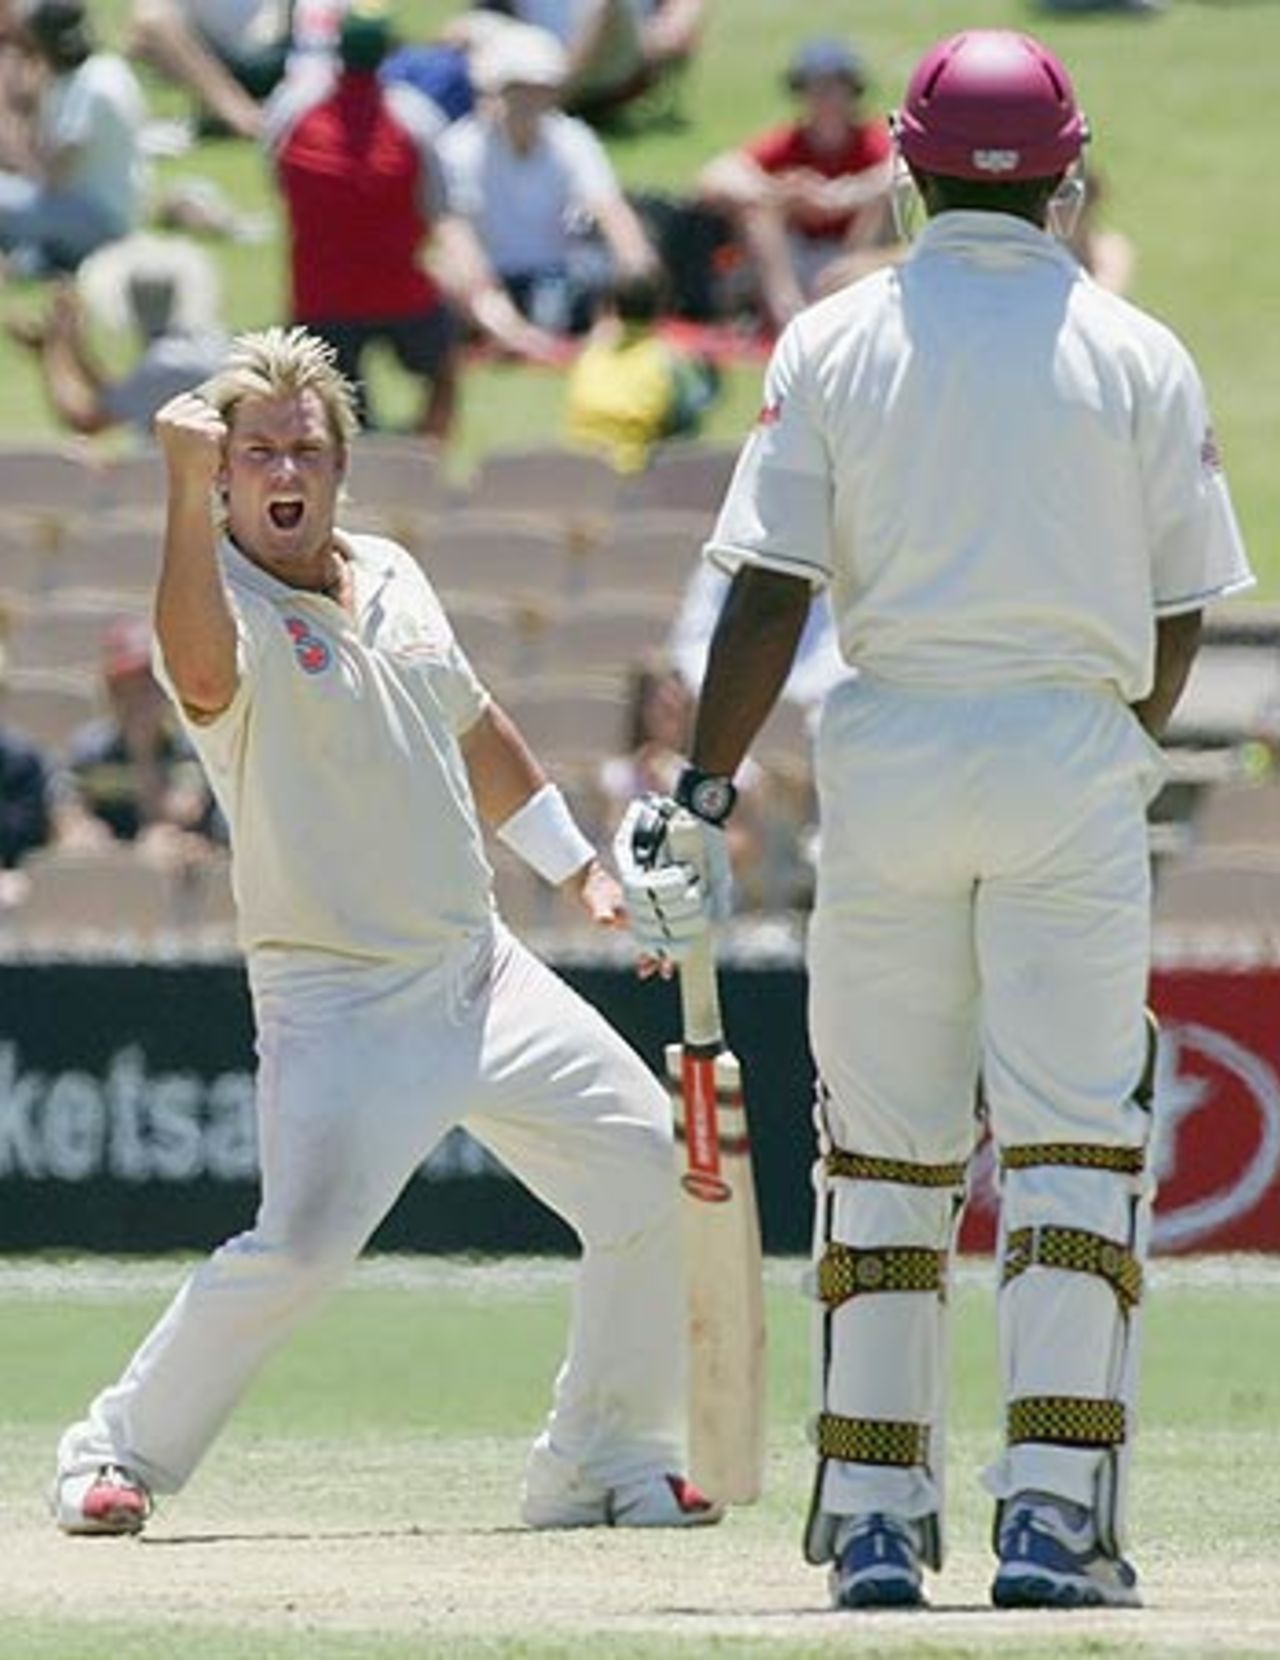 Shane Warne celebrates the wicket of Dwayne Smith, Australia v West Indies, 3rd Test, Adelaide, 4th day, November 28, 2005